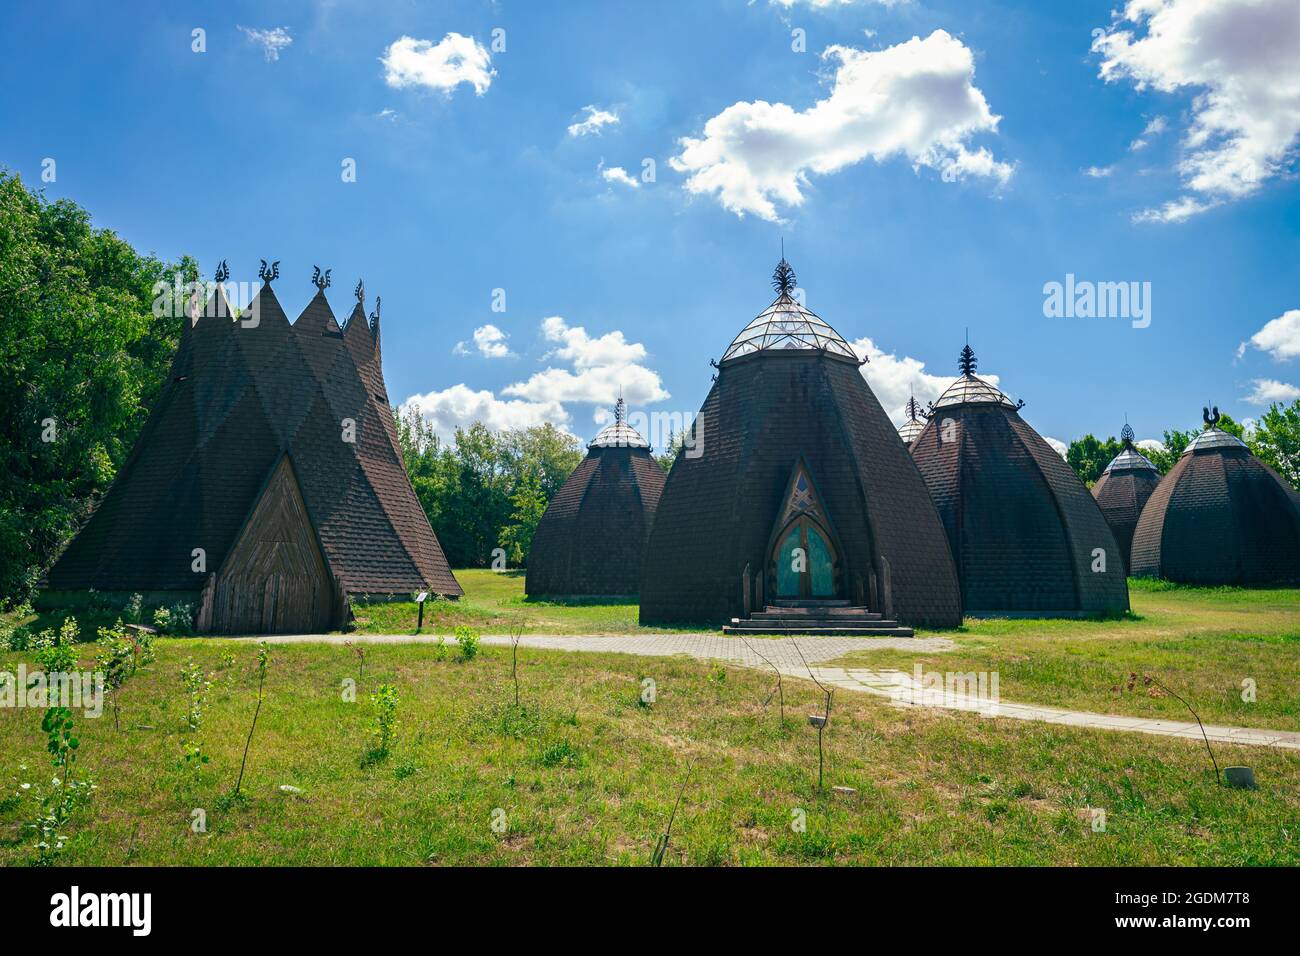 Yurts de Csete en el Parque Nacional del Patrimonio de Ópusztaszer, un museo al aire libre de la historia húngara Foto de stock